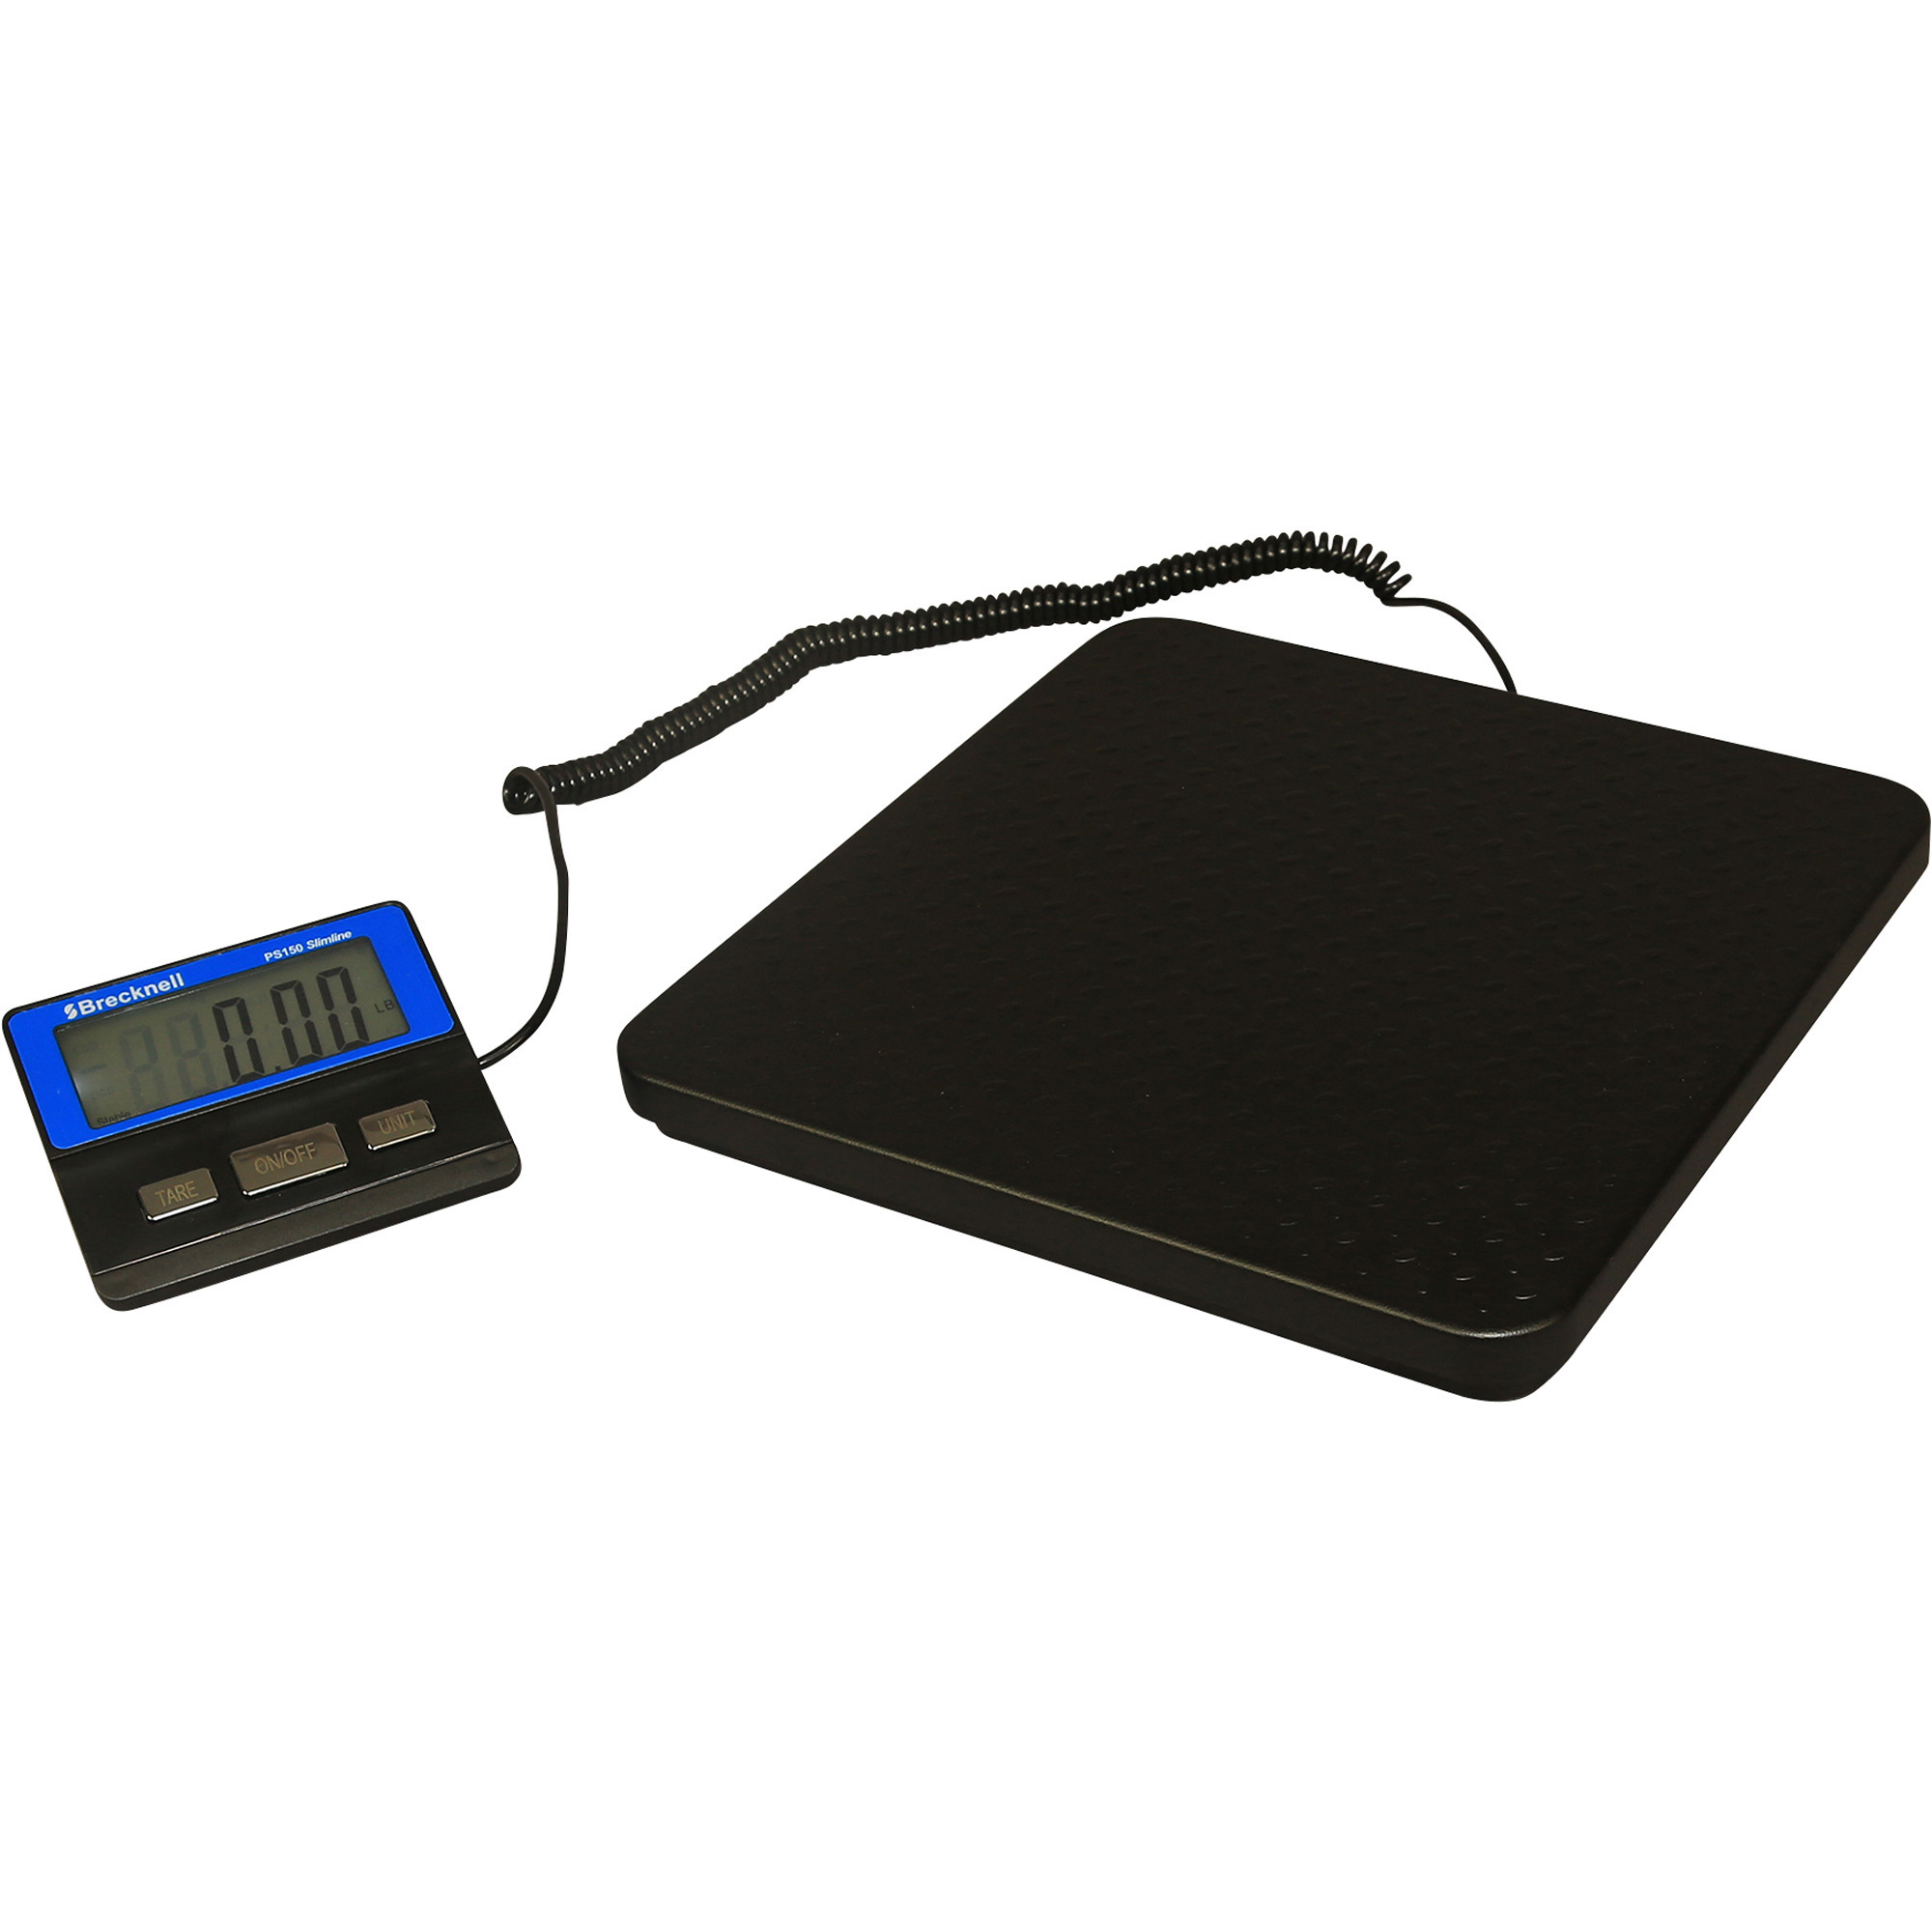 Brecknell PS150 Slimline Portable Bench Scale, 150-lb. Capacity, Model 816965007516